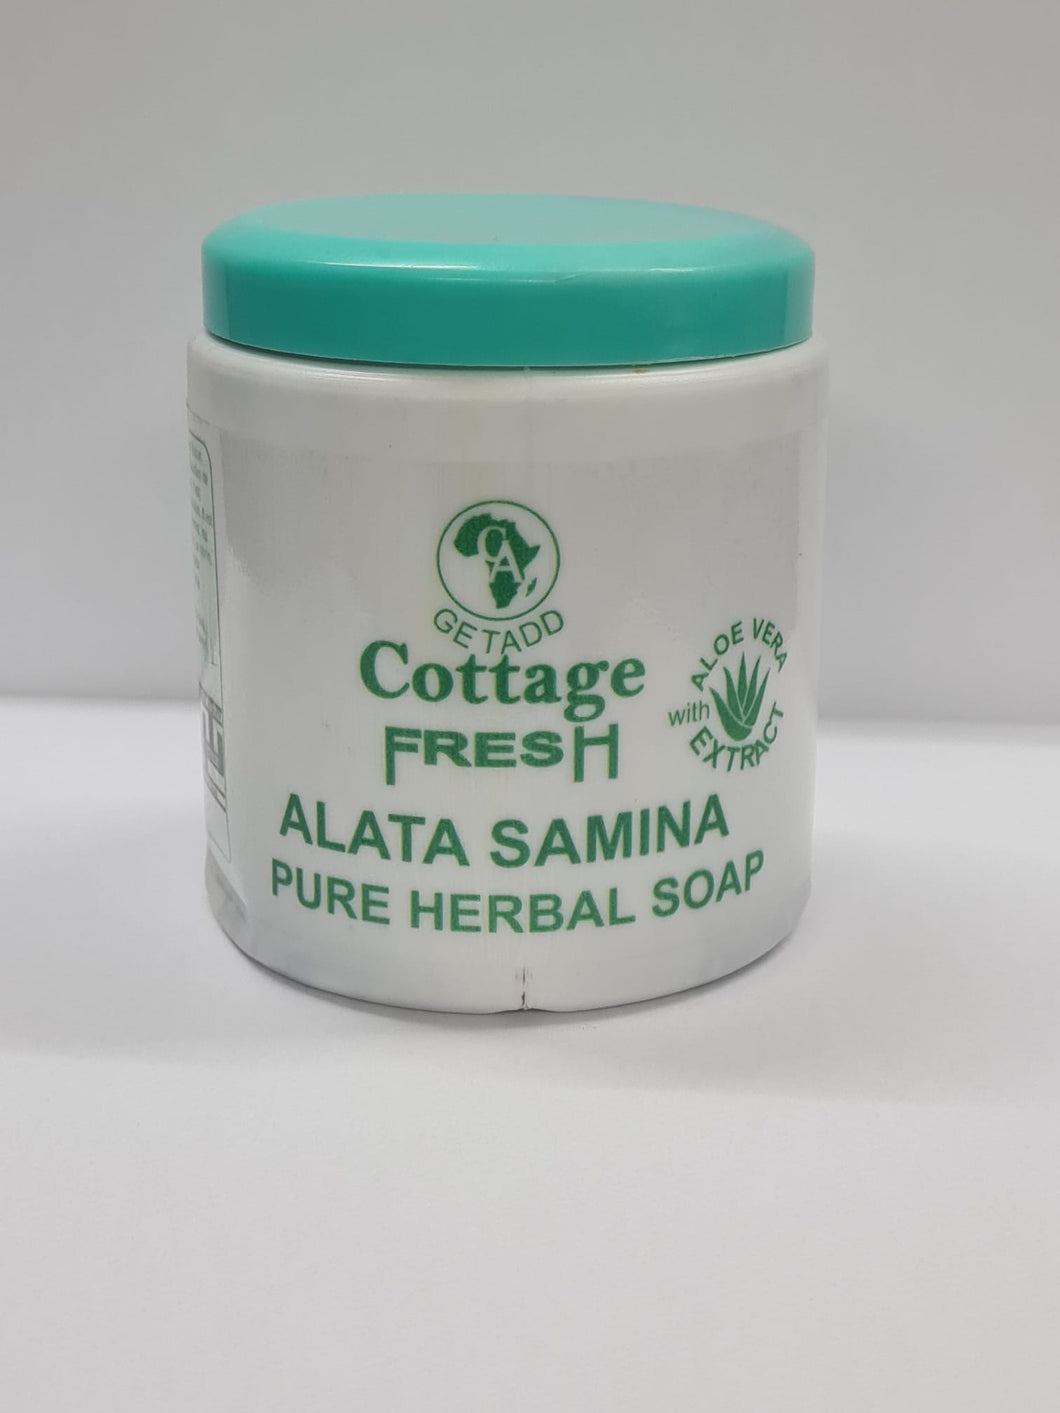 COTTAGE FRESH Alata Samina Pure Herbal Soap With Aloe Vera Extract.